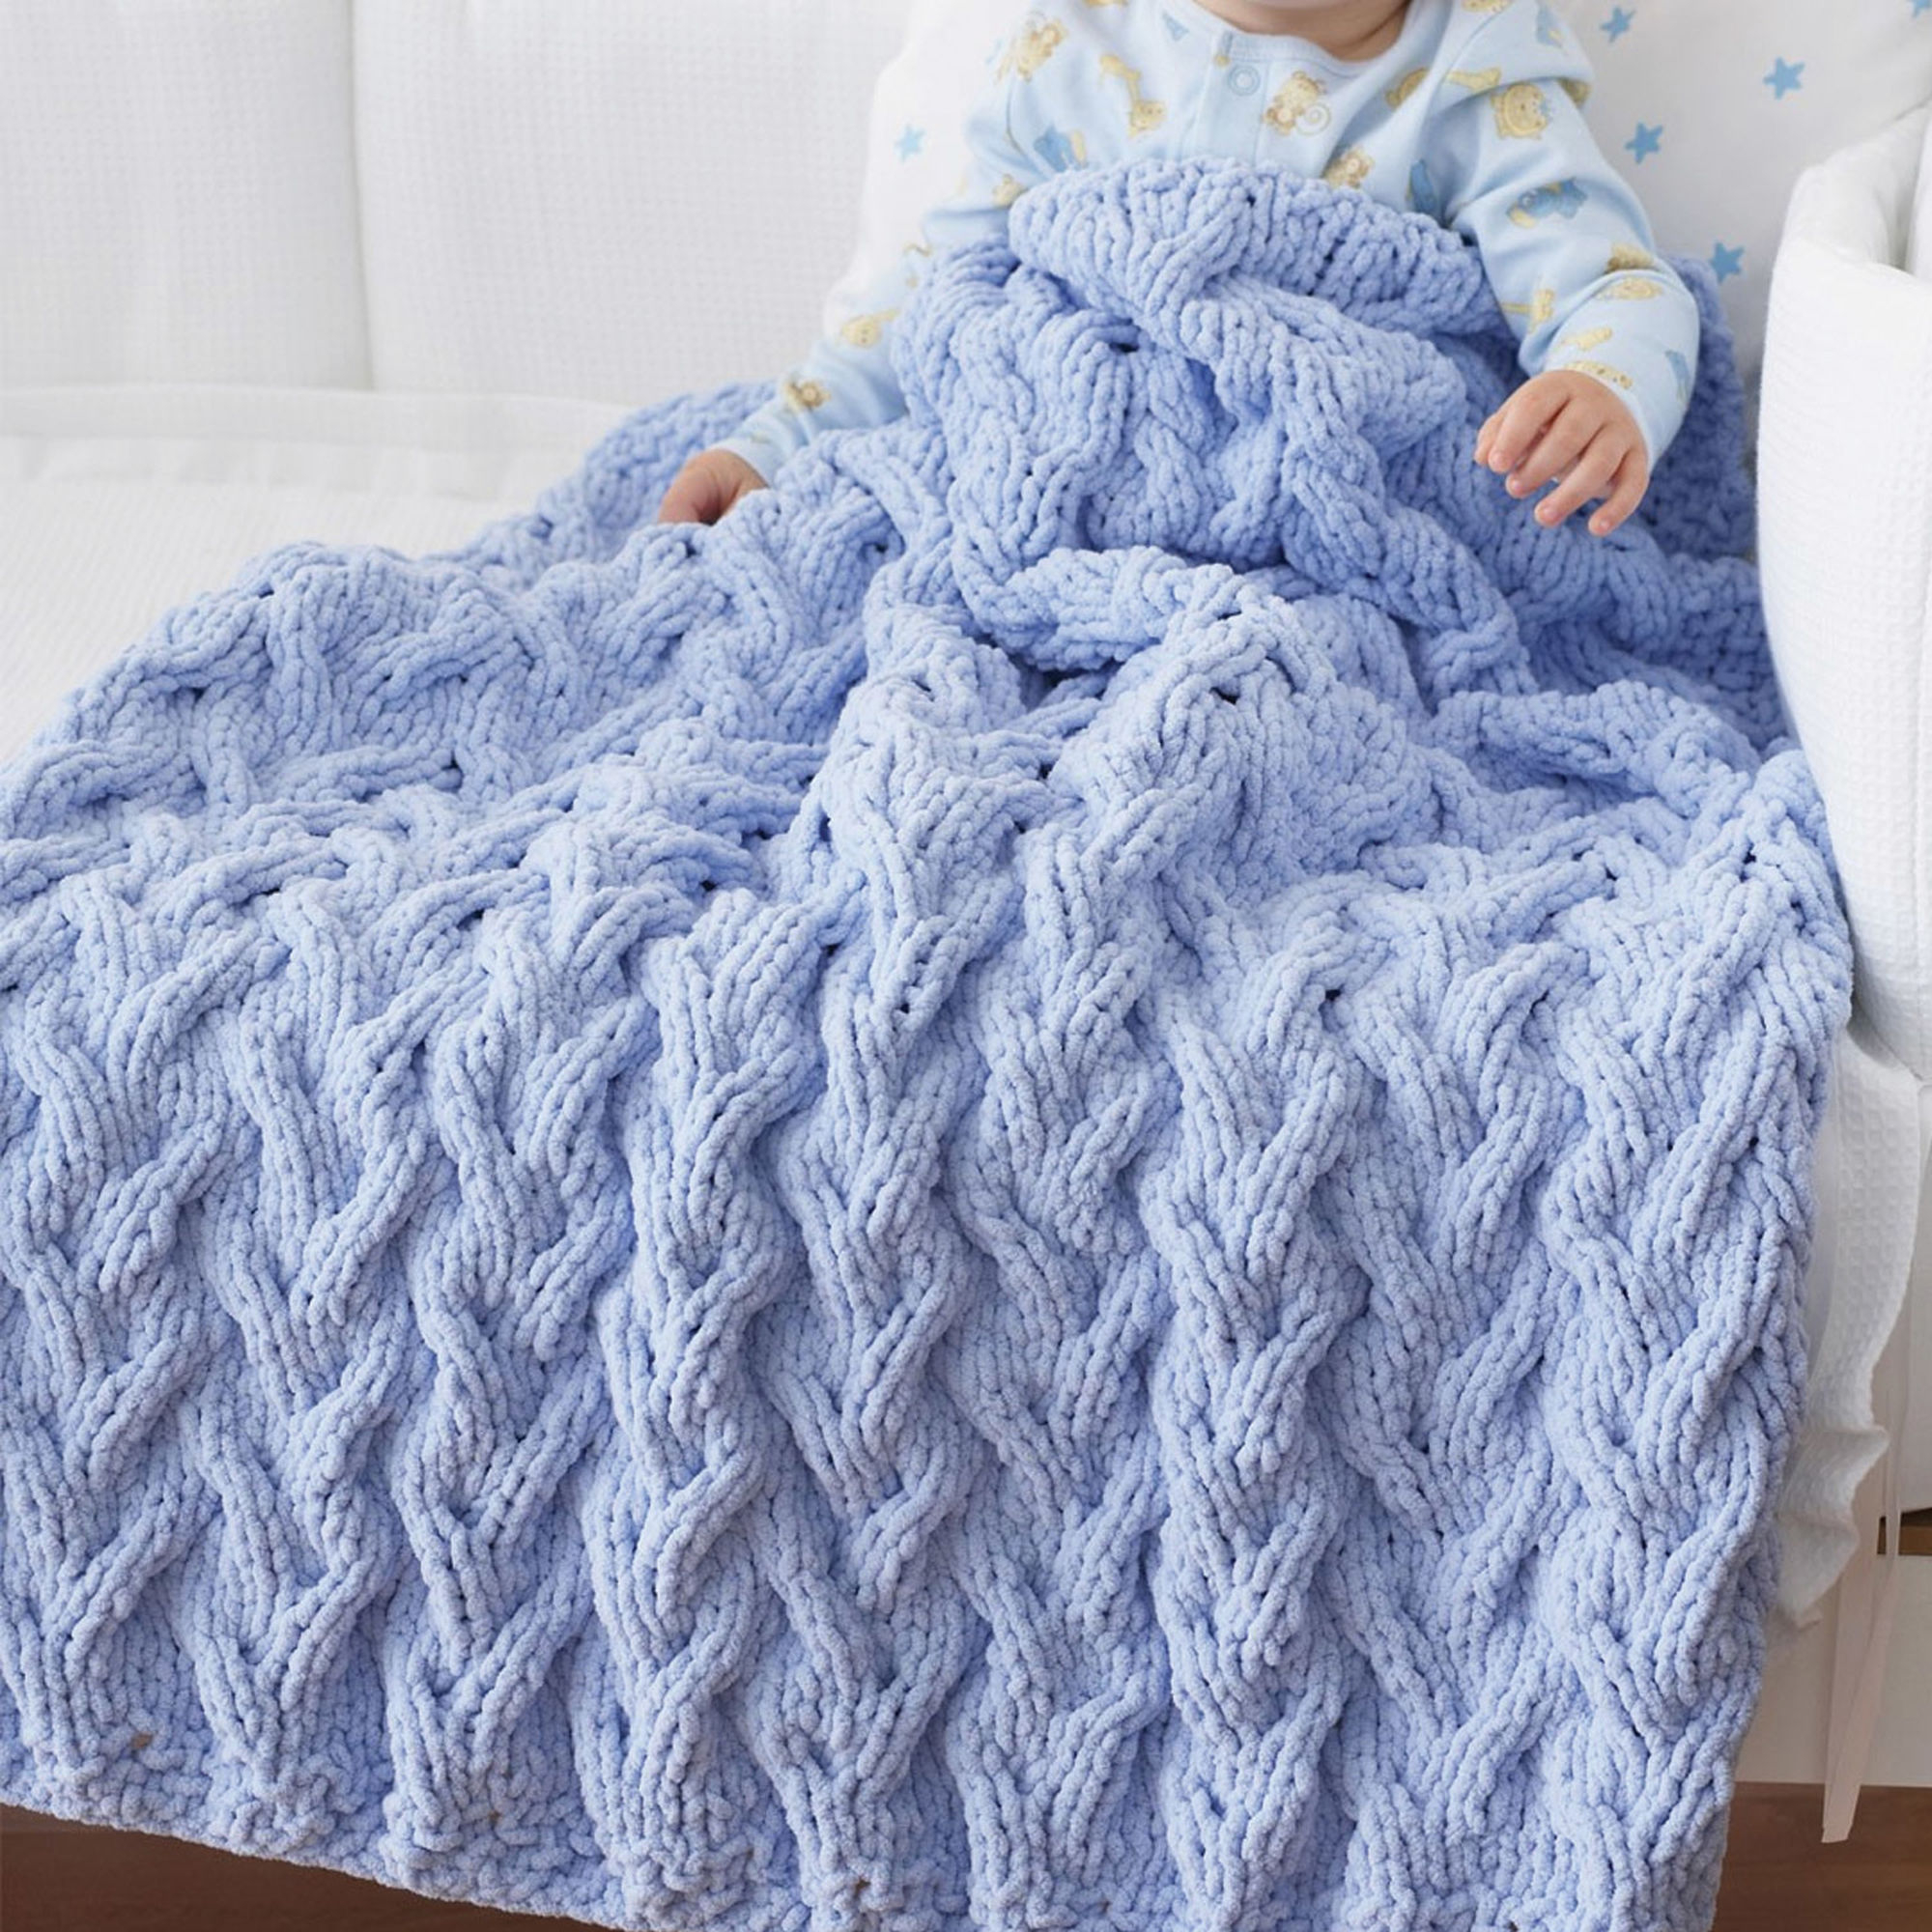 Baby Blanket Free Knitting Pattern Lovely Cabled Ba Blanket Free Knitting Pattern